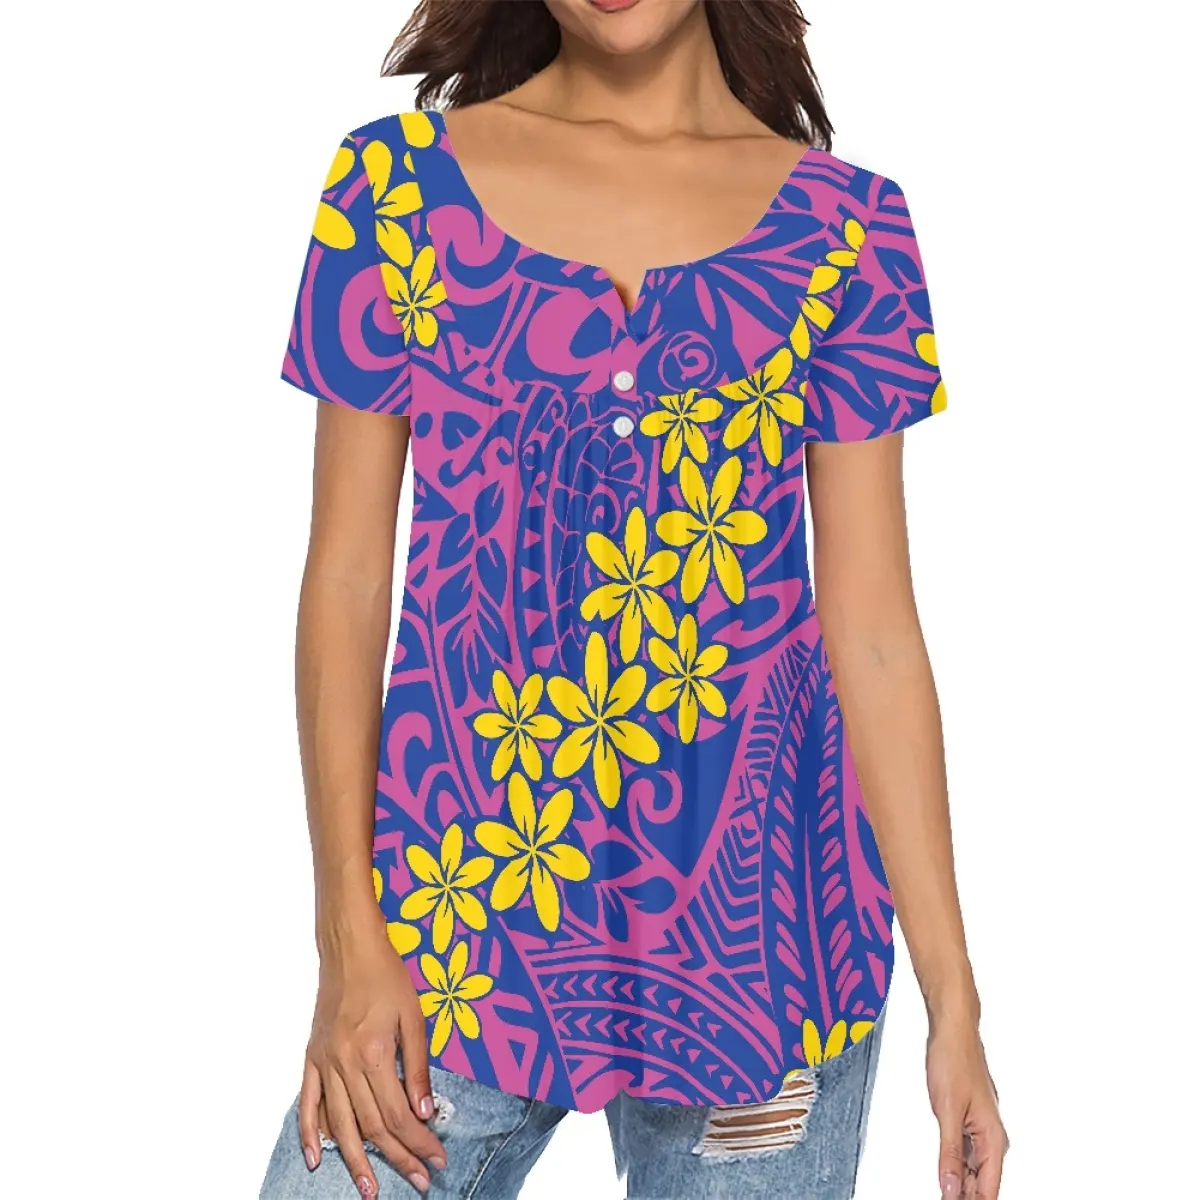 Kaus wanita musim panas motif Plumeria gaya Tribal polinesian kaus wanita Streetwear trendi ukuran Plus kaus lengan pendek pabrik terbaru